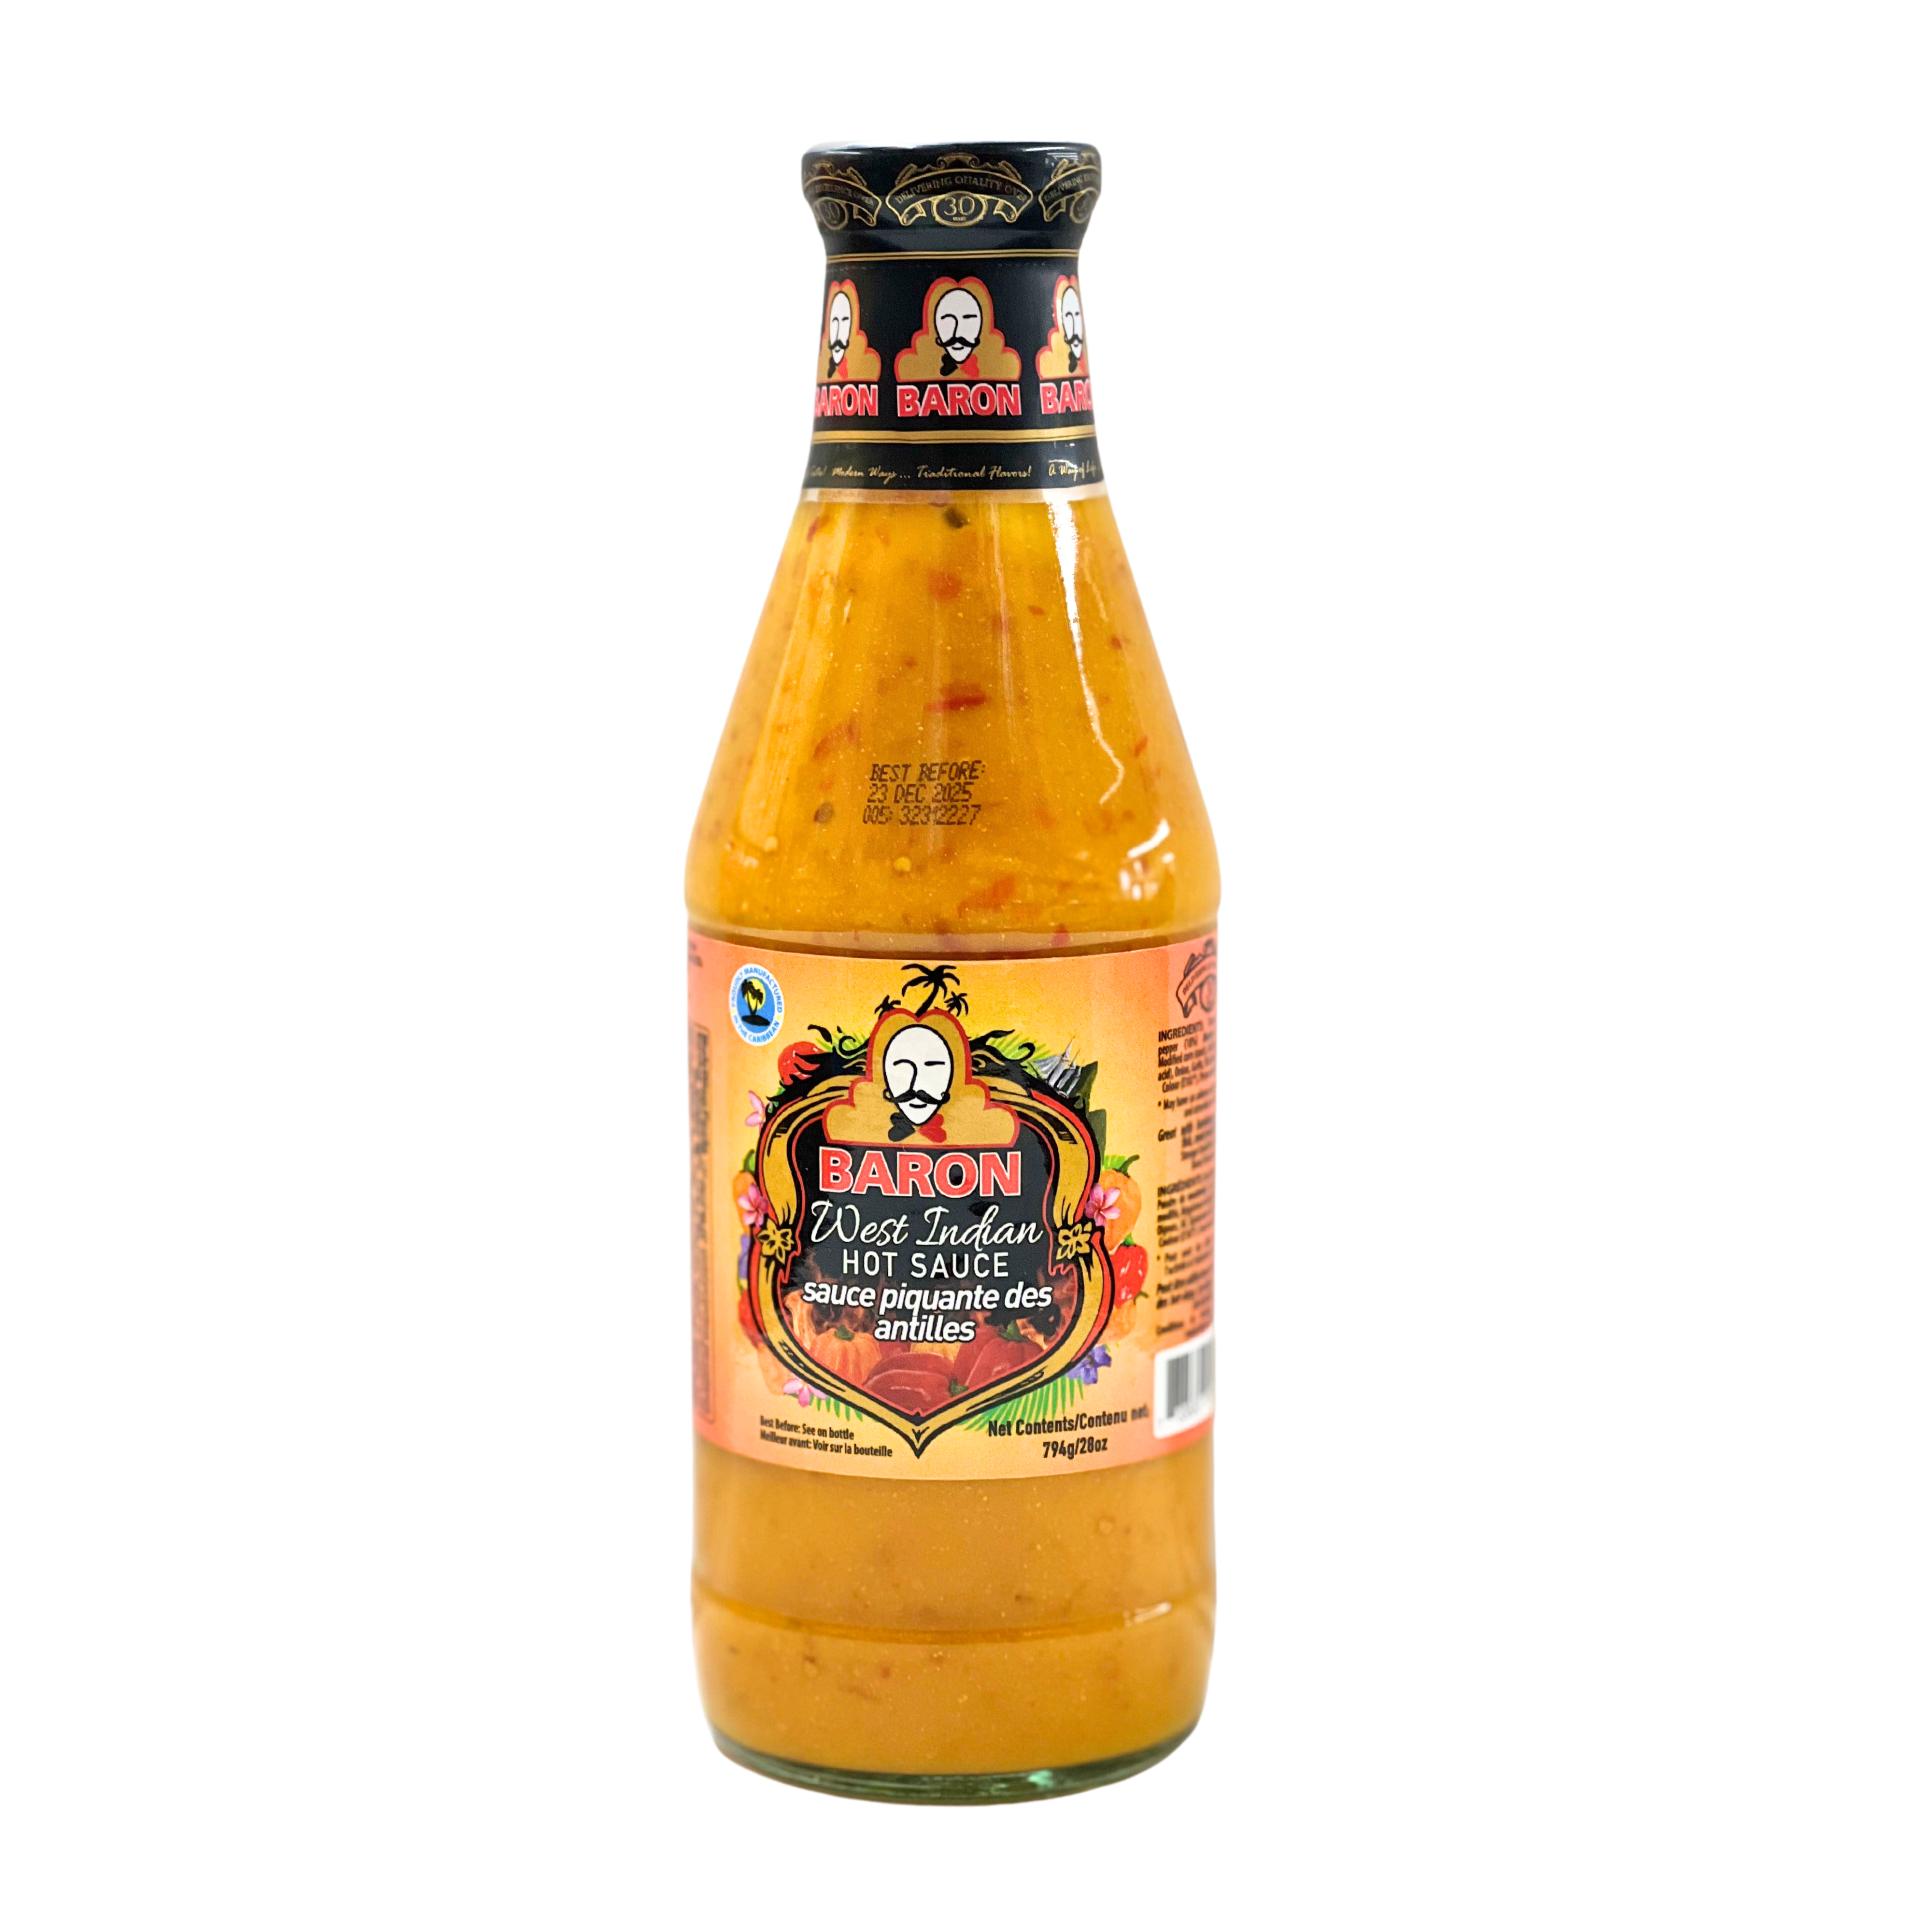 Baron West Indian Hot Sauce Yellow 794g